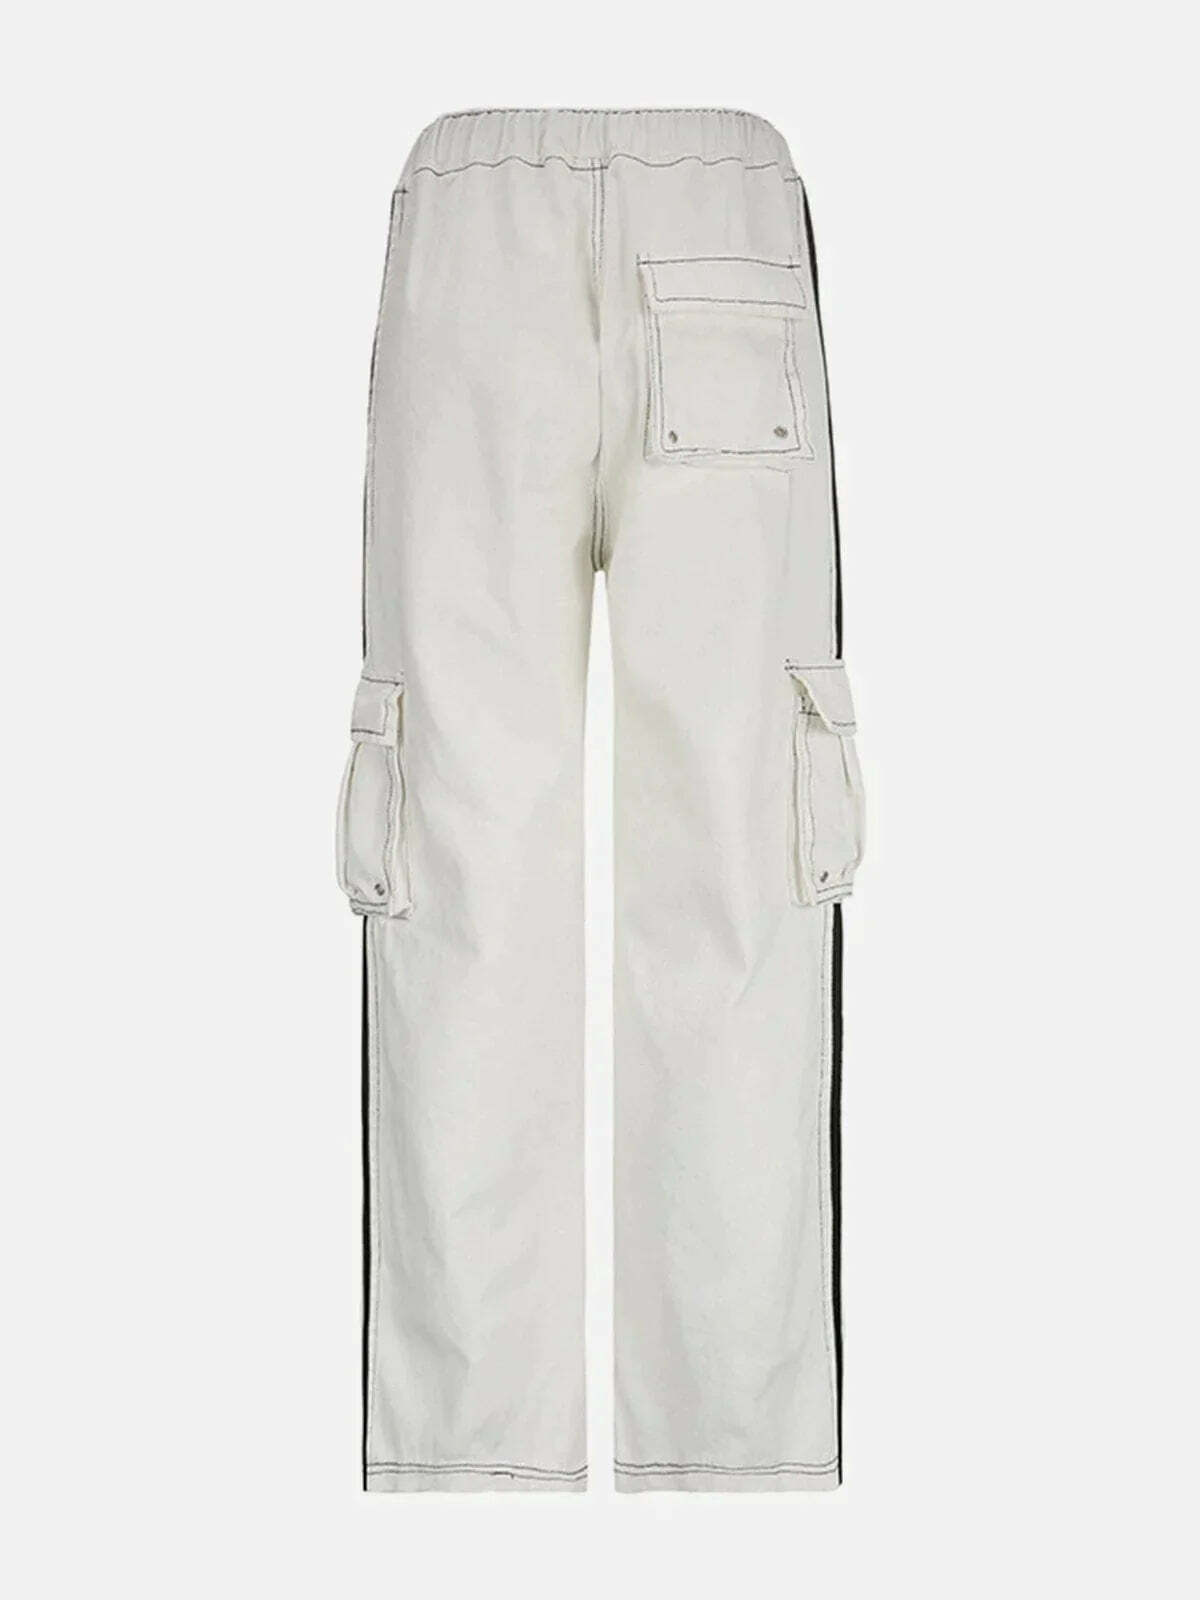 color clash straight leg jeans edgy & vibrant streetwear 3642